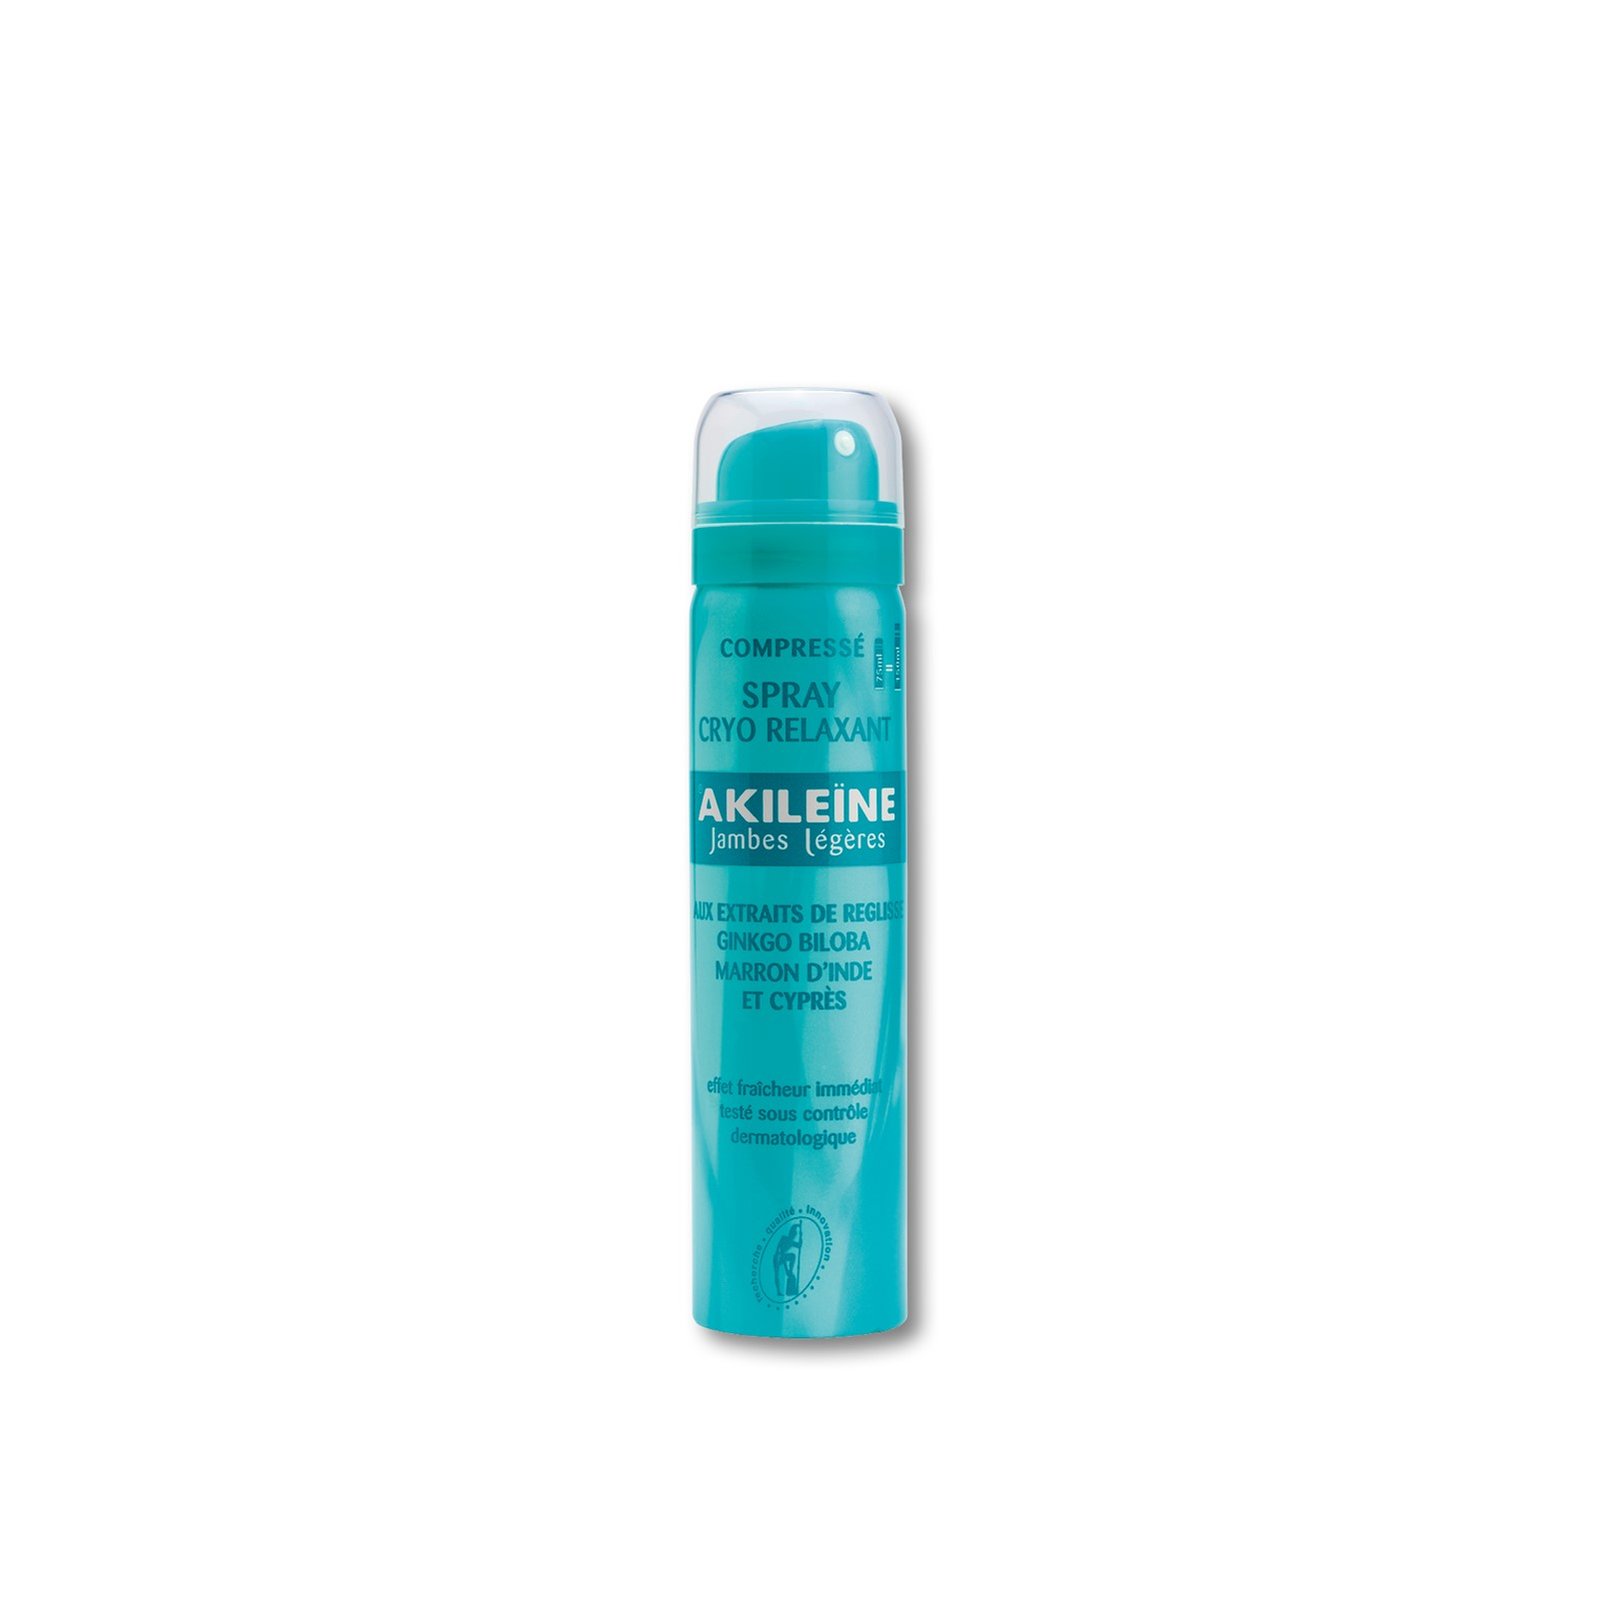 Akileine Cryo-Relaxing Spray for Tired Legs 75ml